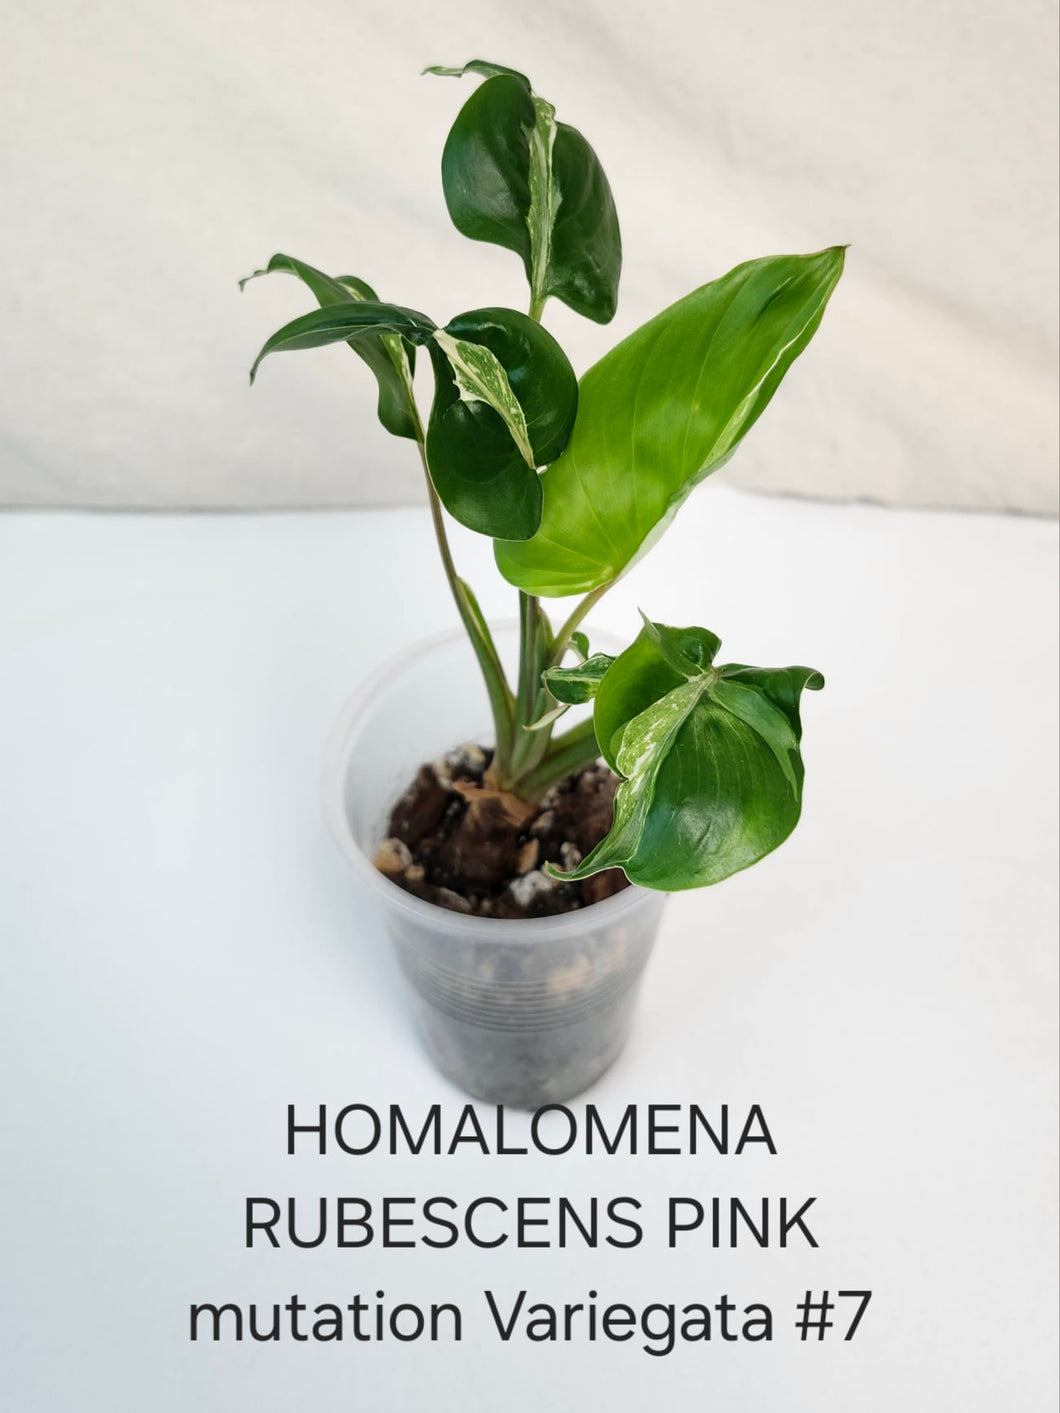 Homalonema rubescens pink mutation variegata #7